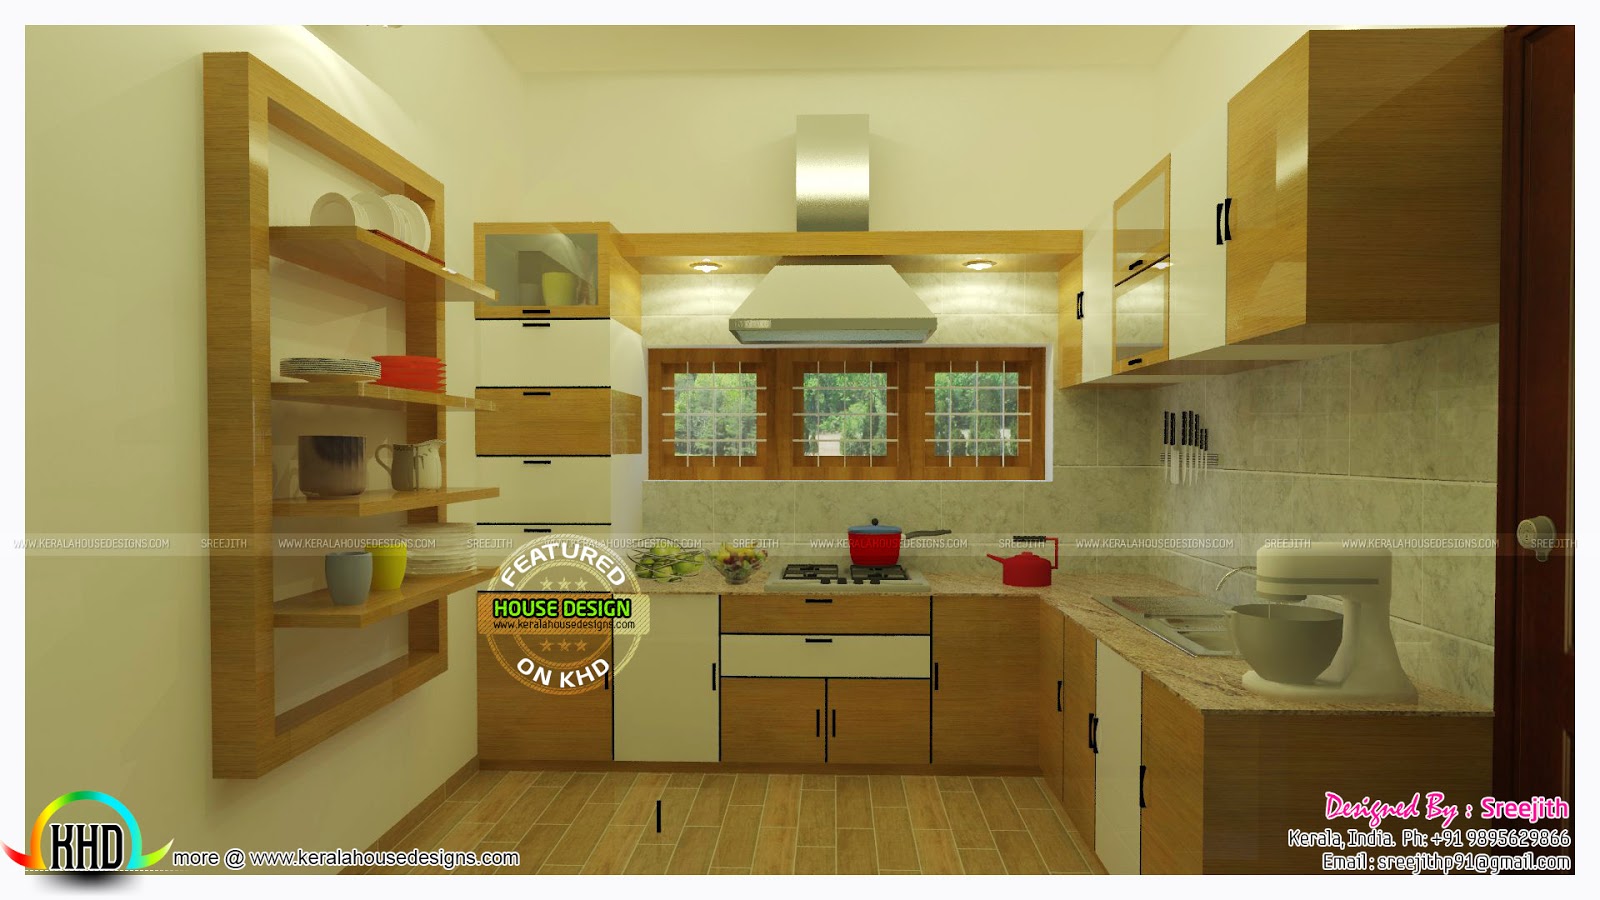 Modular Kitchen design trends 2017 - Kerala home design ...